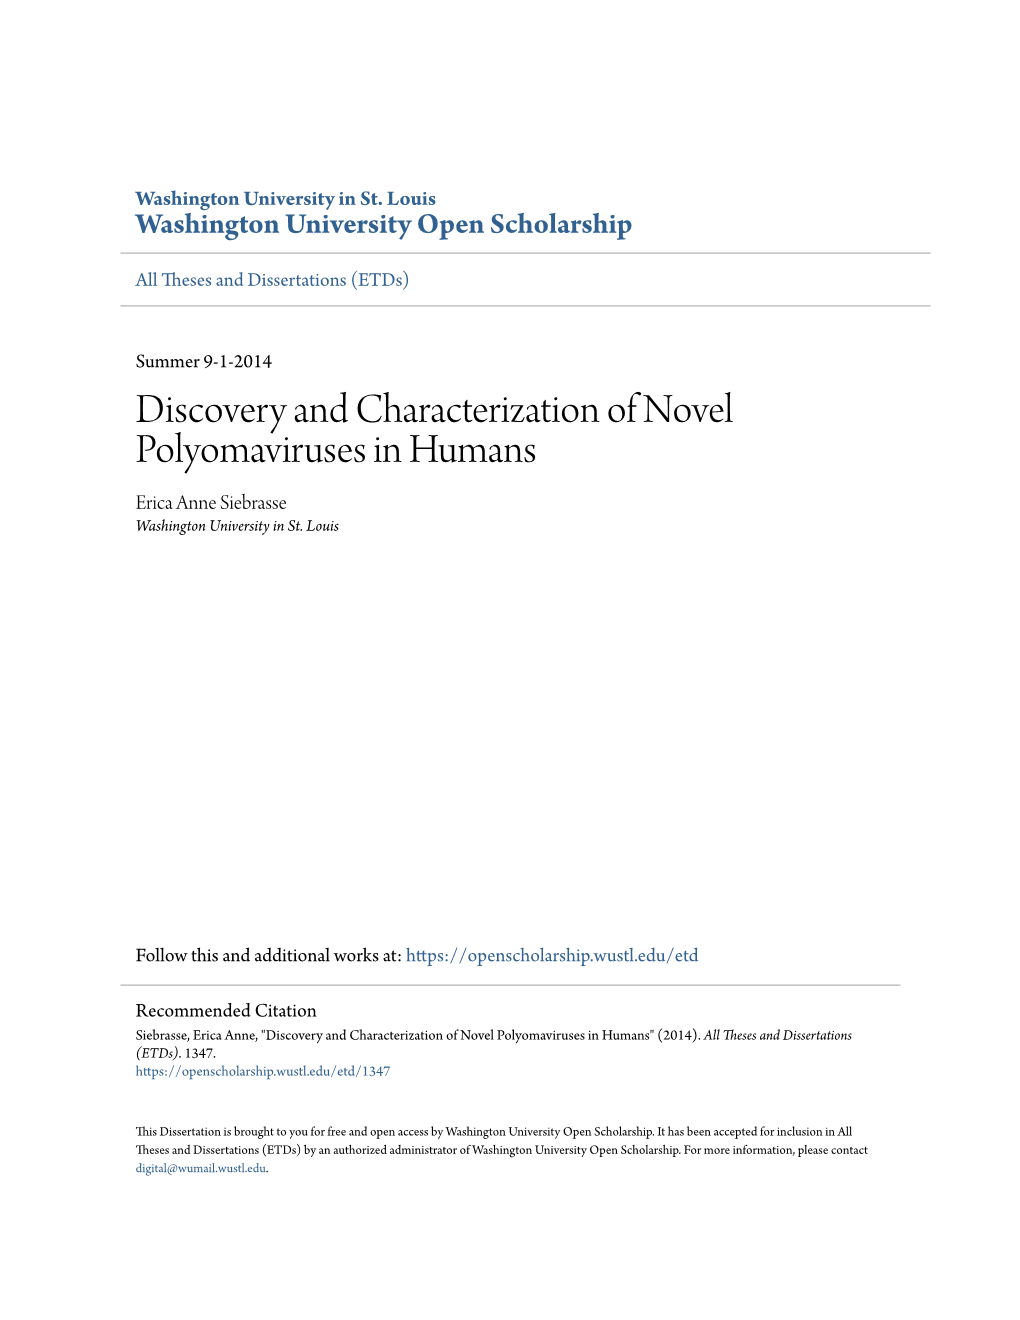 Discovery and Characterization of Novel Polyomaviruses in Humans Erica Anne Siebrasse Washington University in St